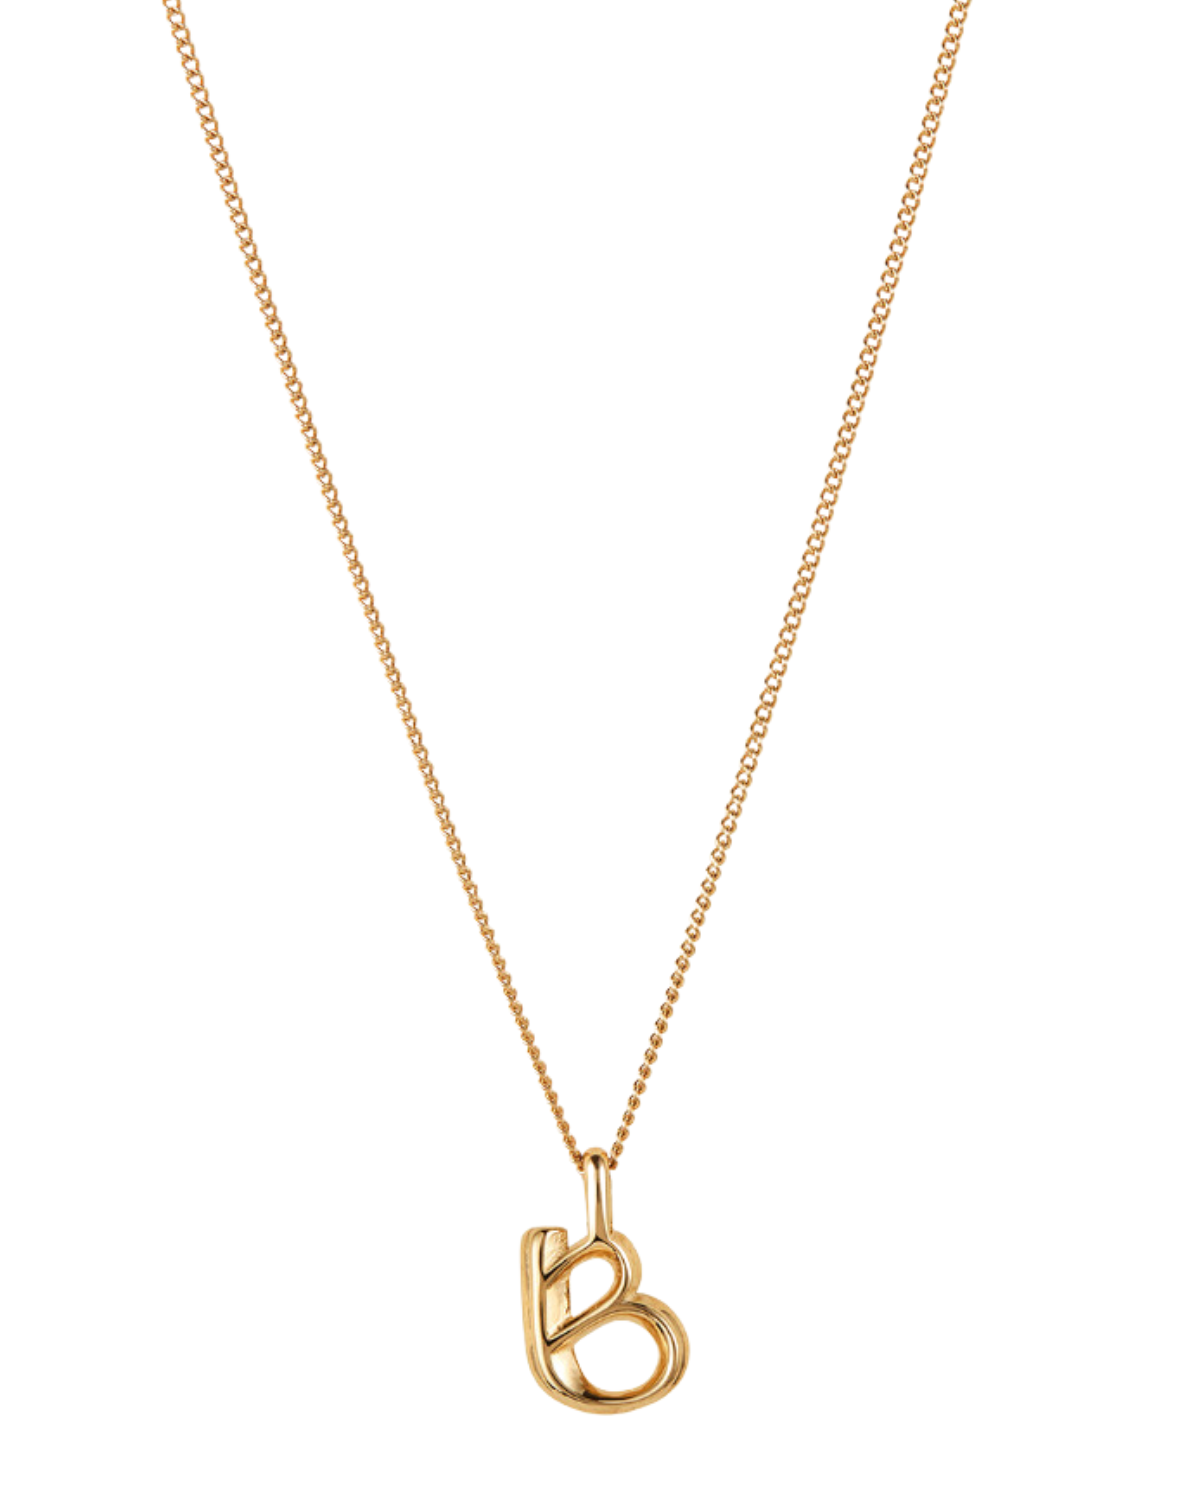 Monogram Necklace - B (Gold)